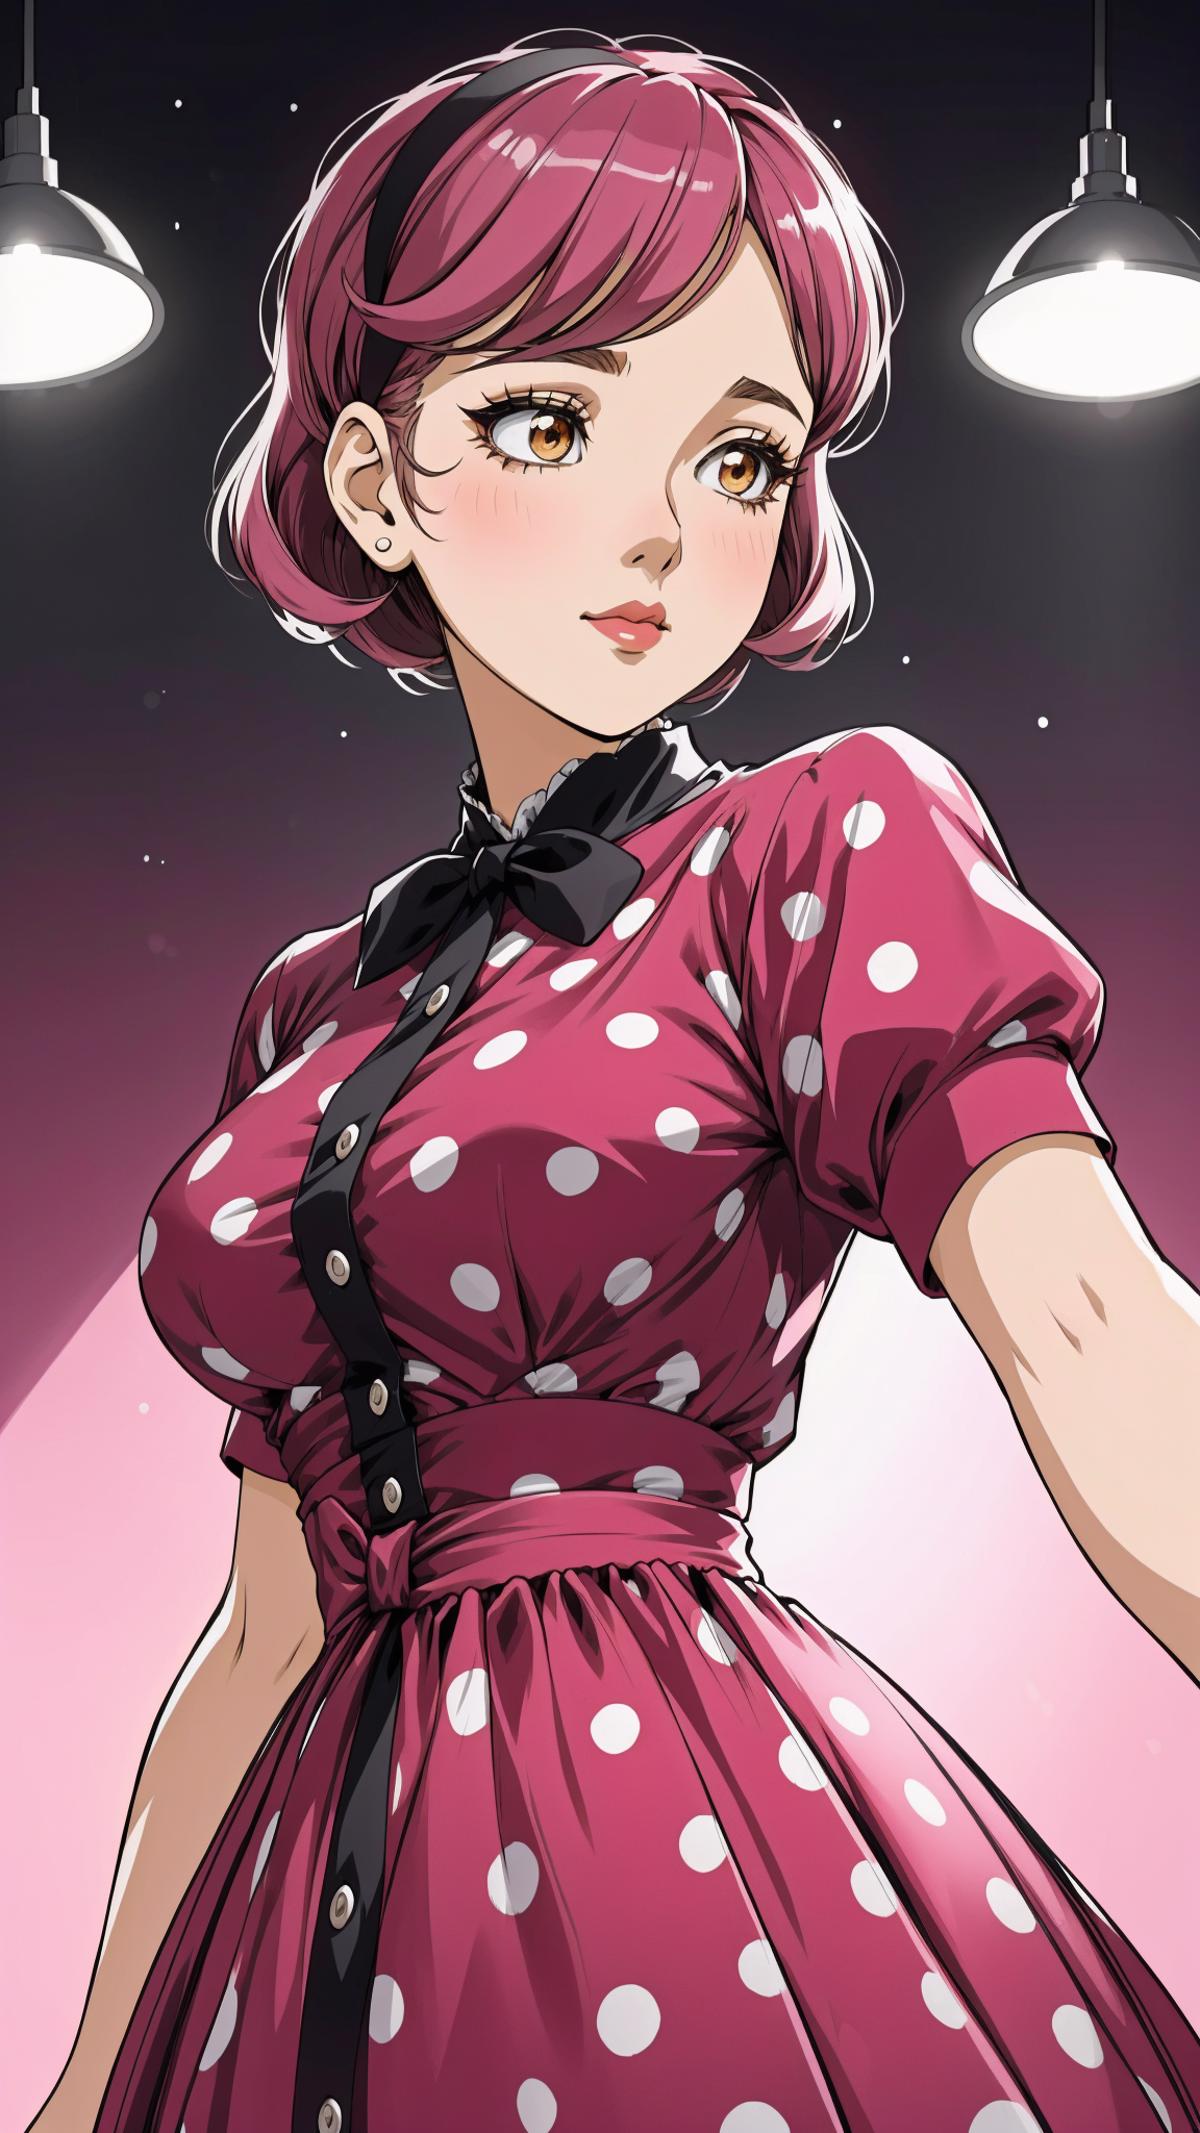 A cartoon illustration of a woman wearing a pink polka dot dress.